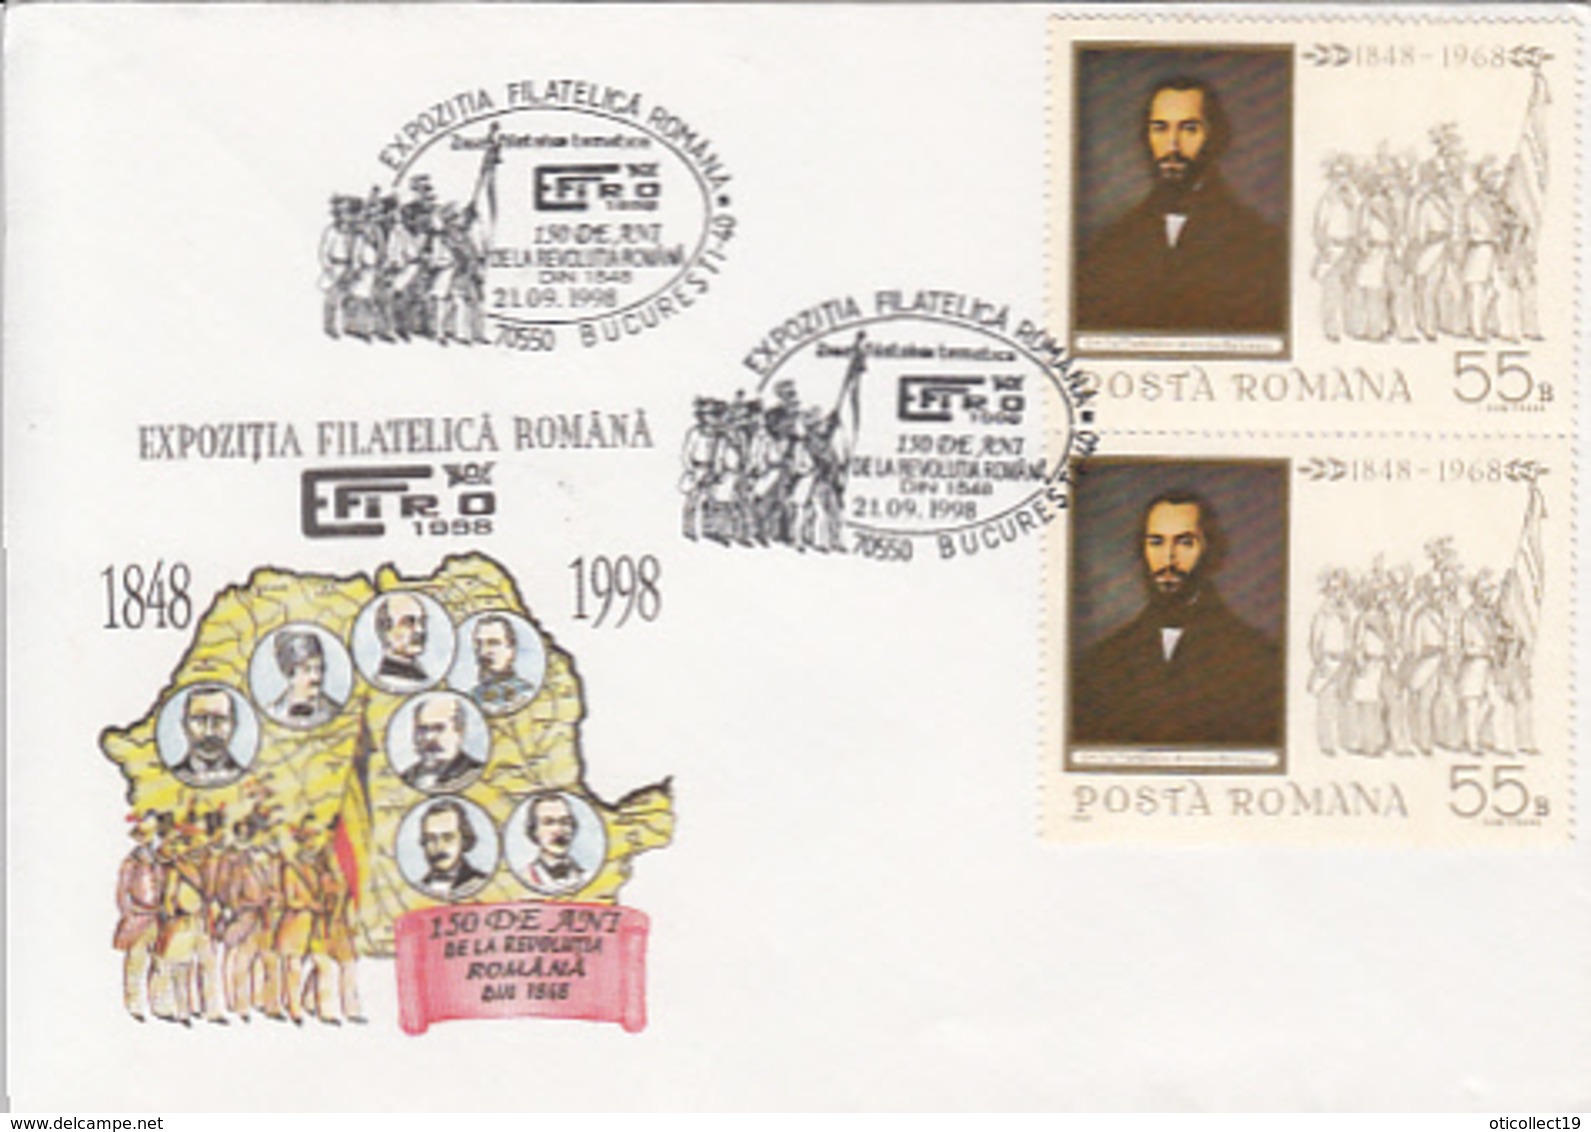 ROMANIAN 1848 REVOLUTION ANNIVERSARY, EFIRO PHILATELIC EXHIBITION, SPECIAL COVER, OVERPRINT STAMP, 1998, ROMANIA - Briefe U. Dokumente